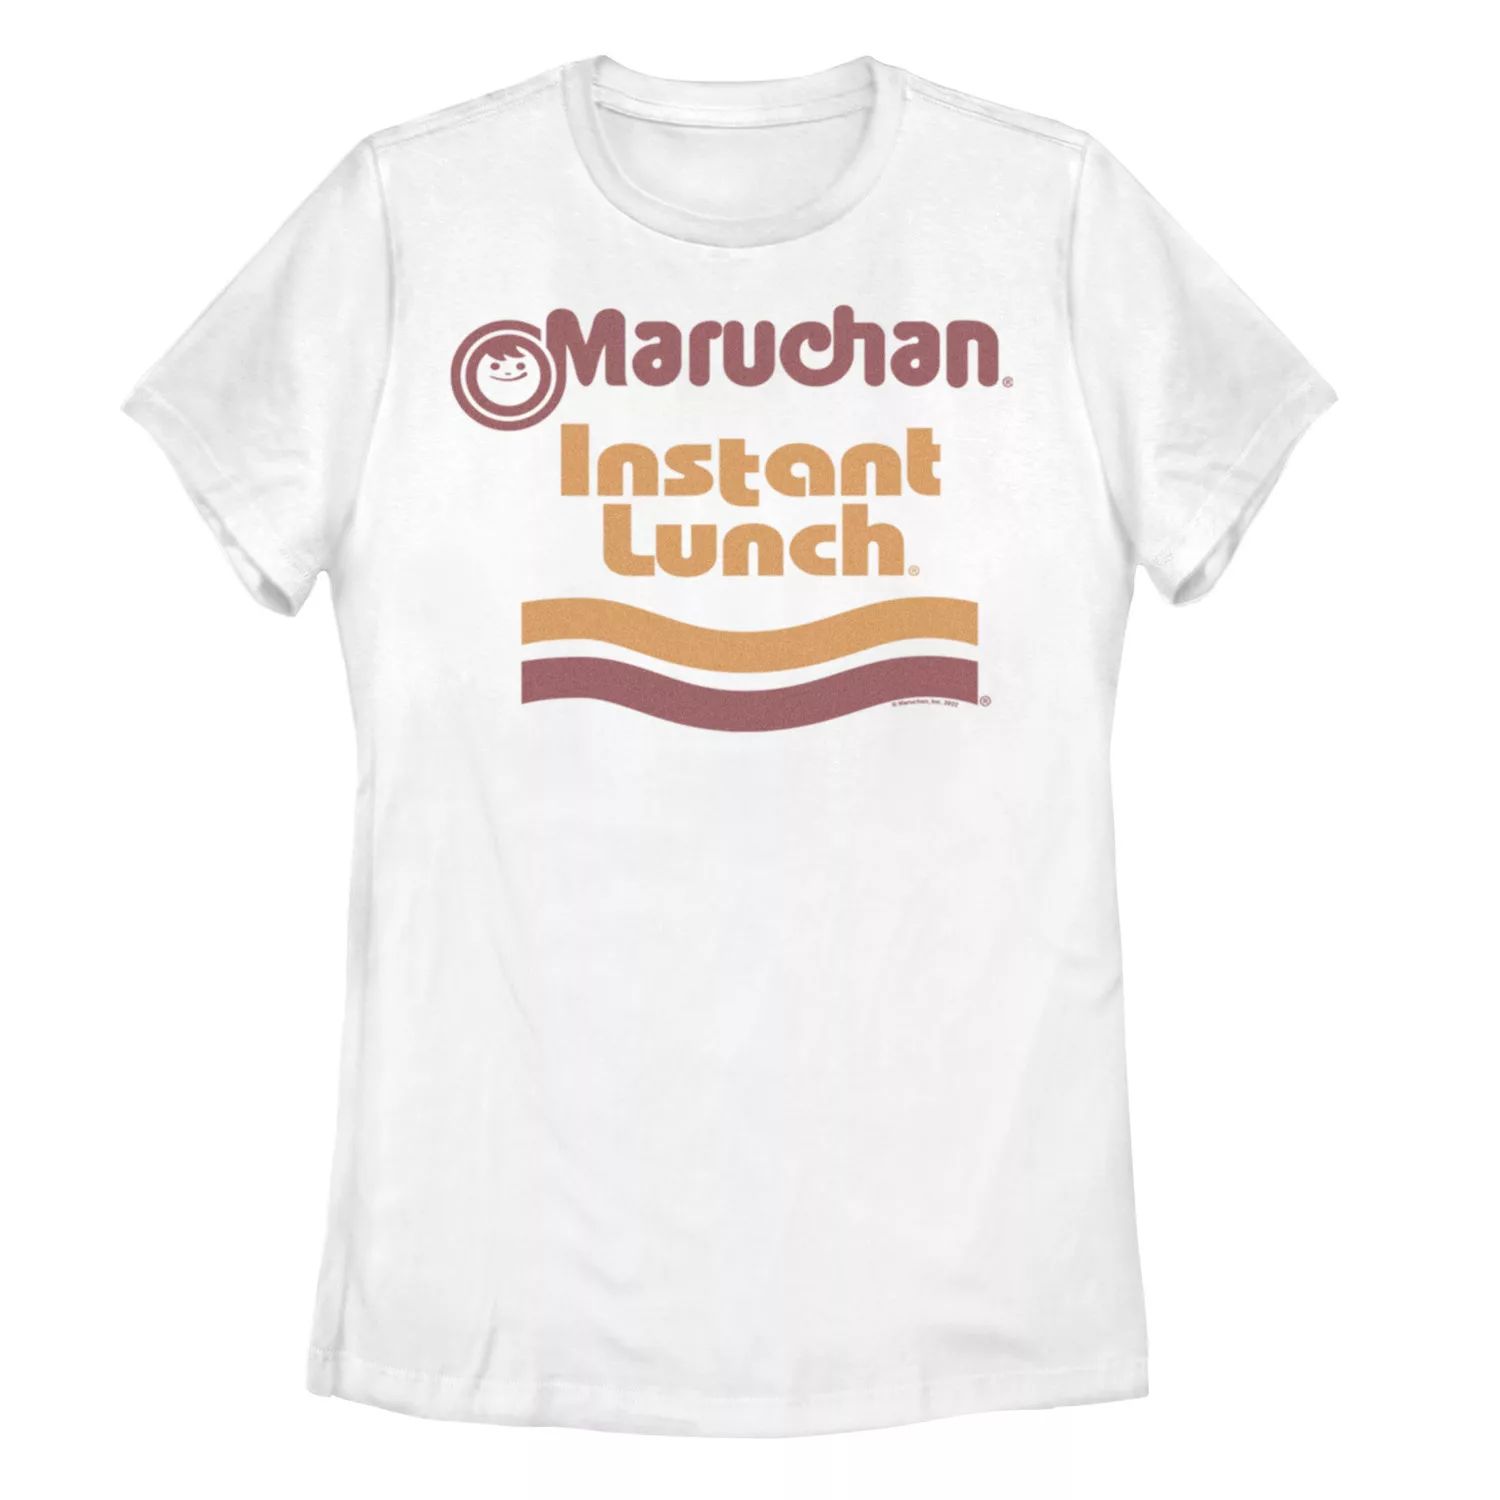 Детская футболка Maruchan с графическим логотипом «Instant Lunch» Licensed Character лапша maruchan instant lunch hot spicy lime shrimp с креветками 64 г